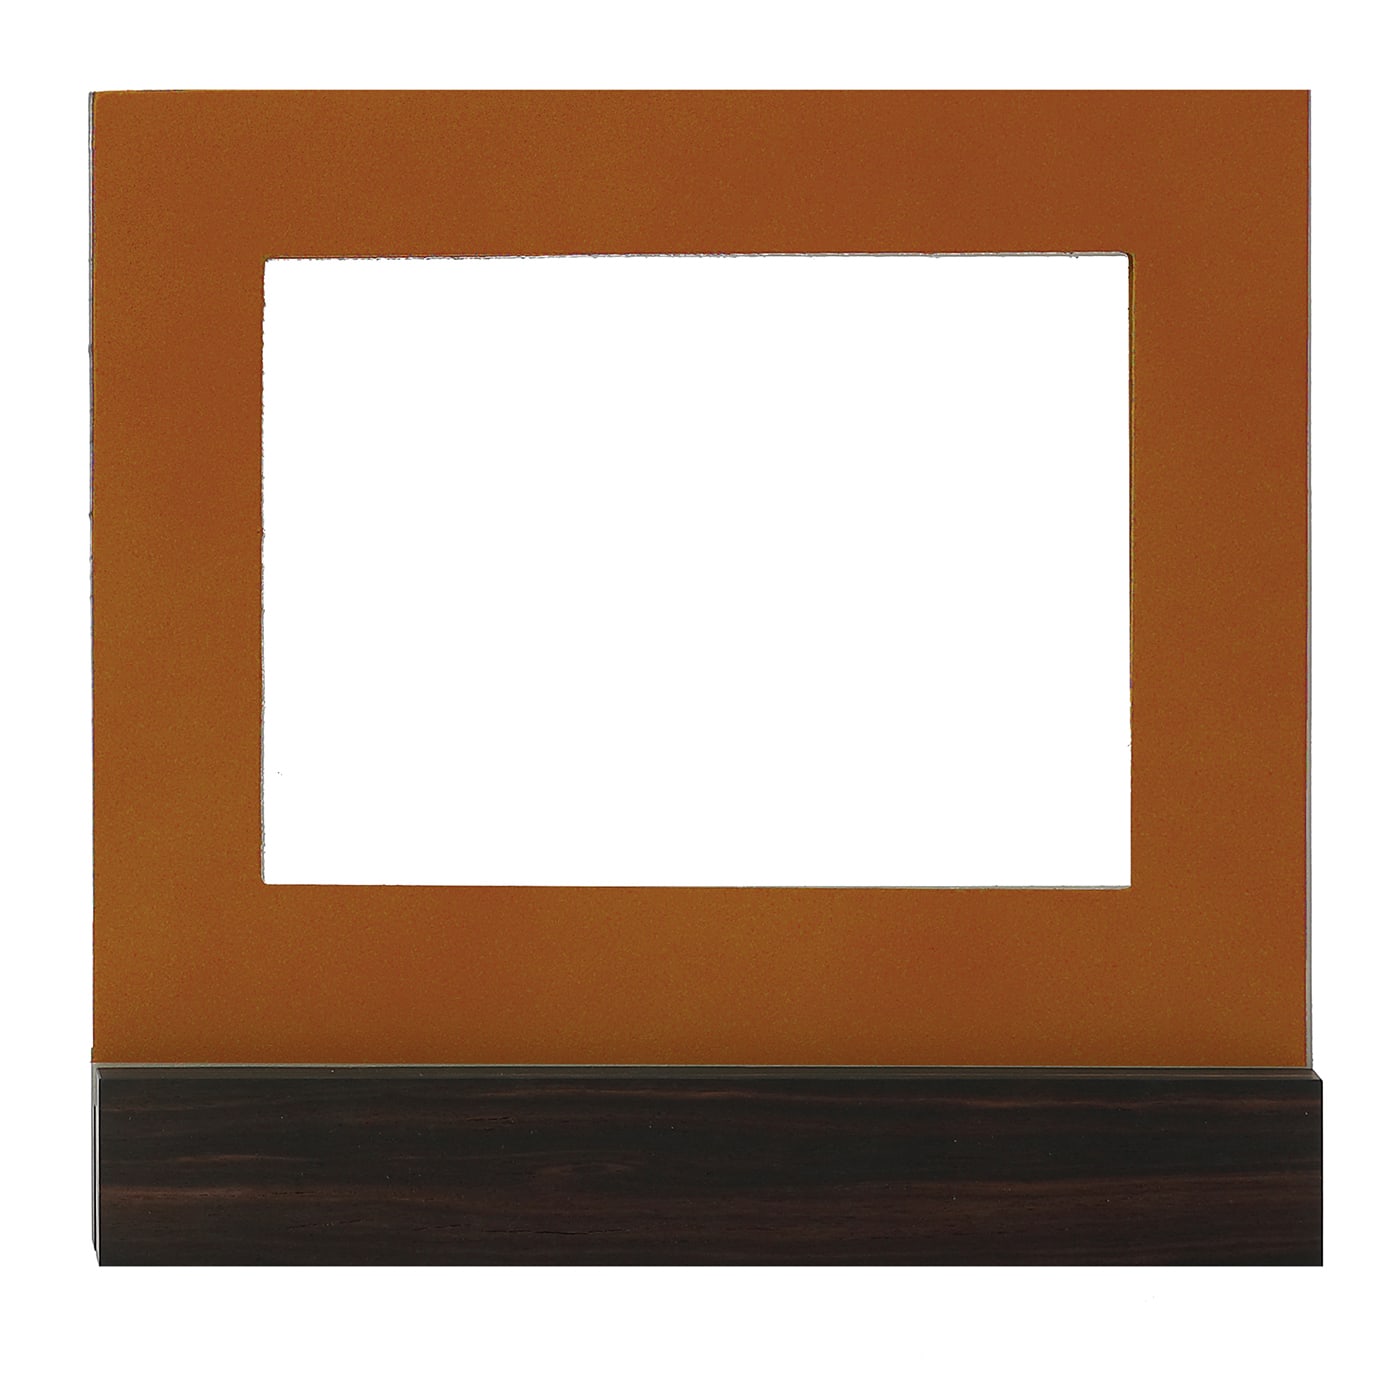 Big Square Ebony O-Frame #1 by Viola Tonucci - Manifestodesign